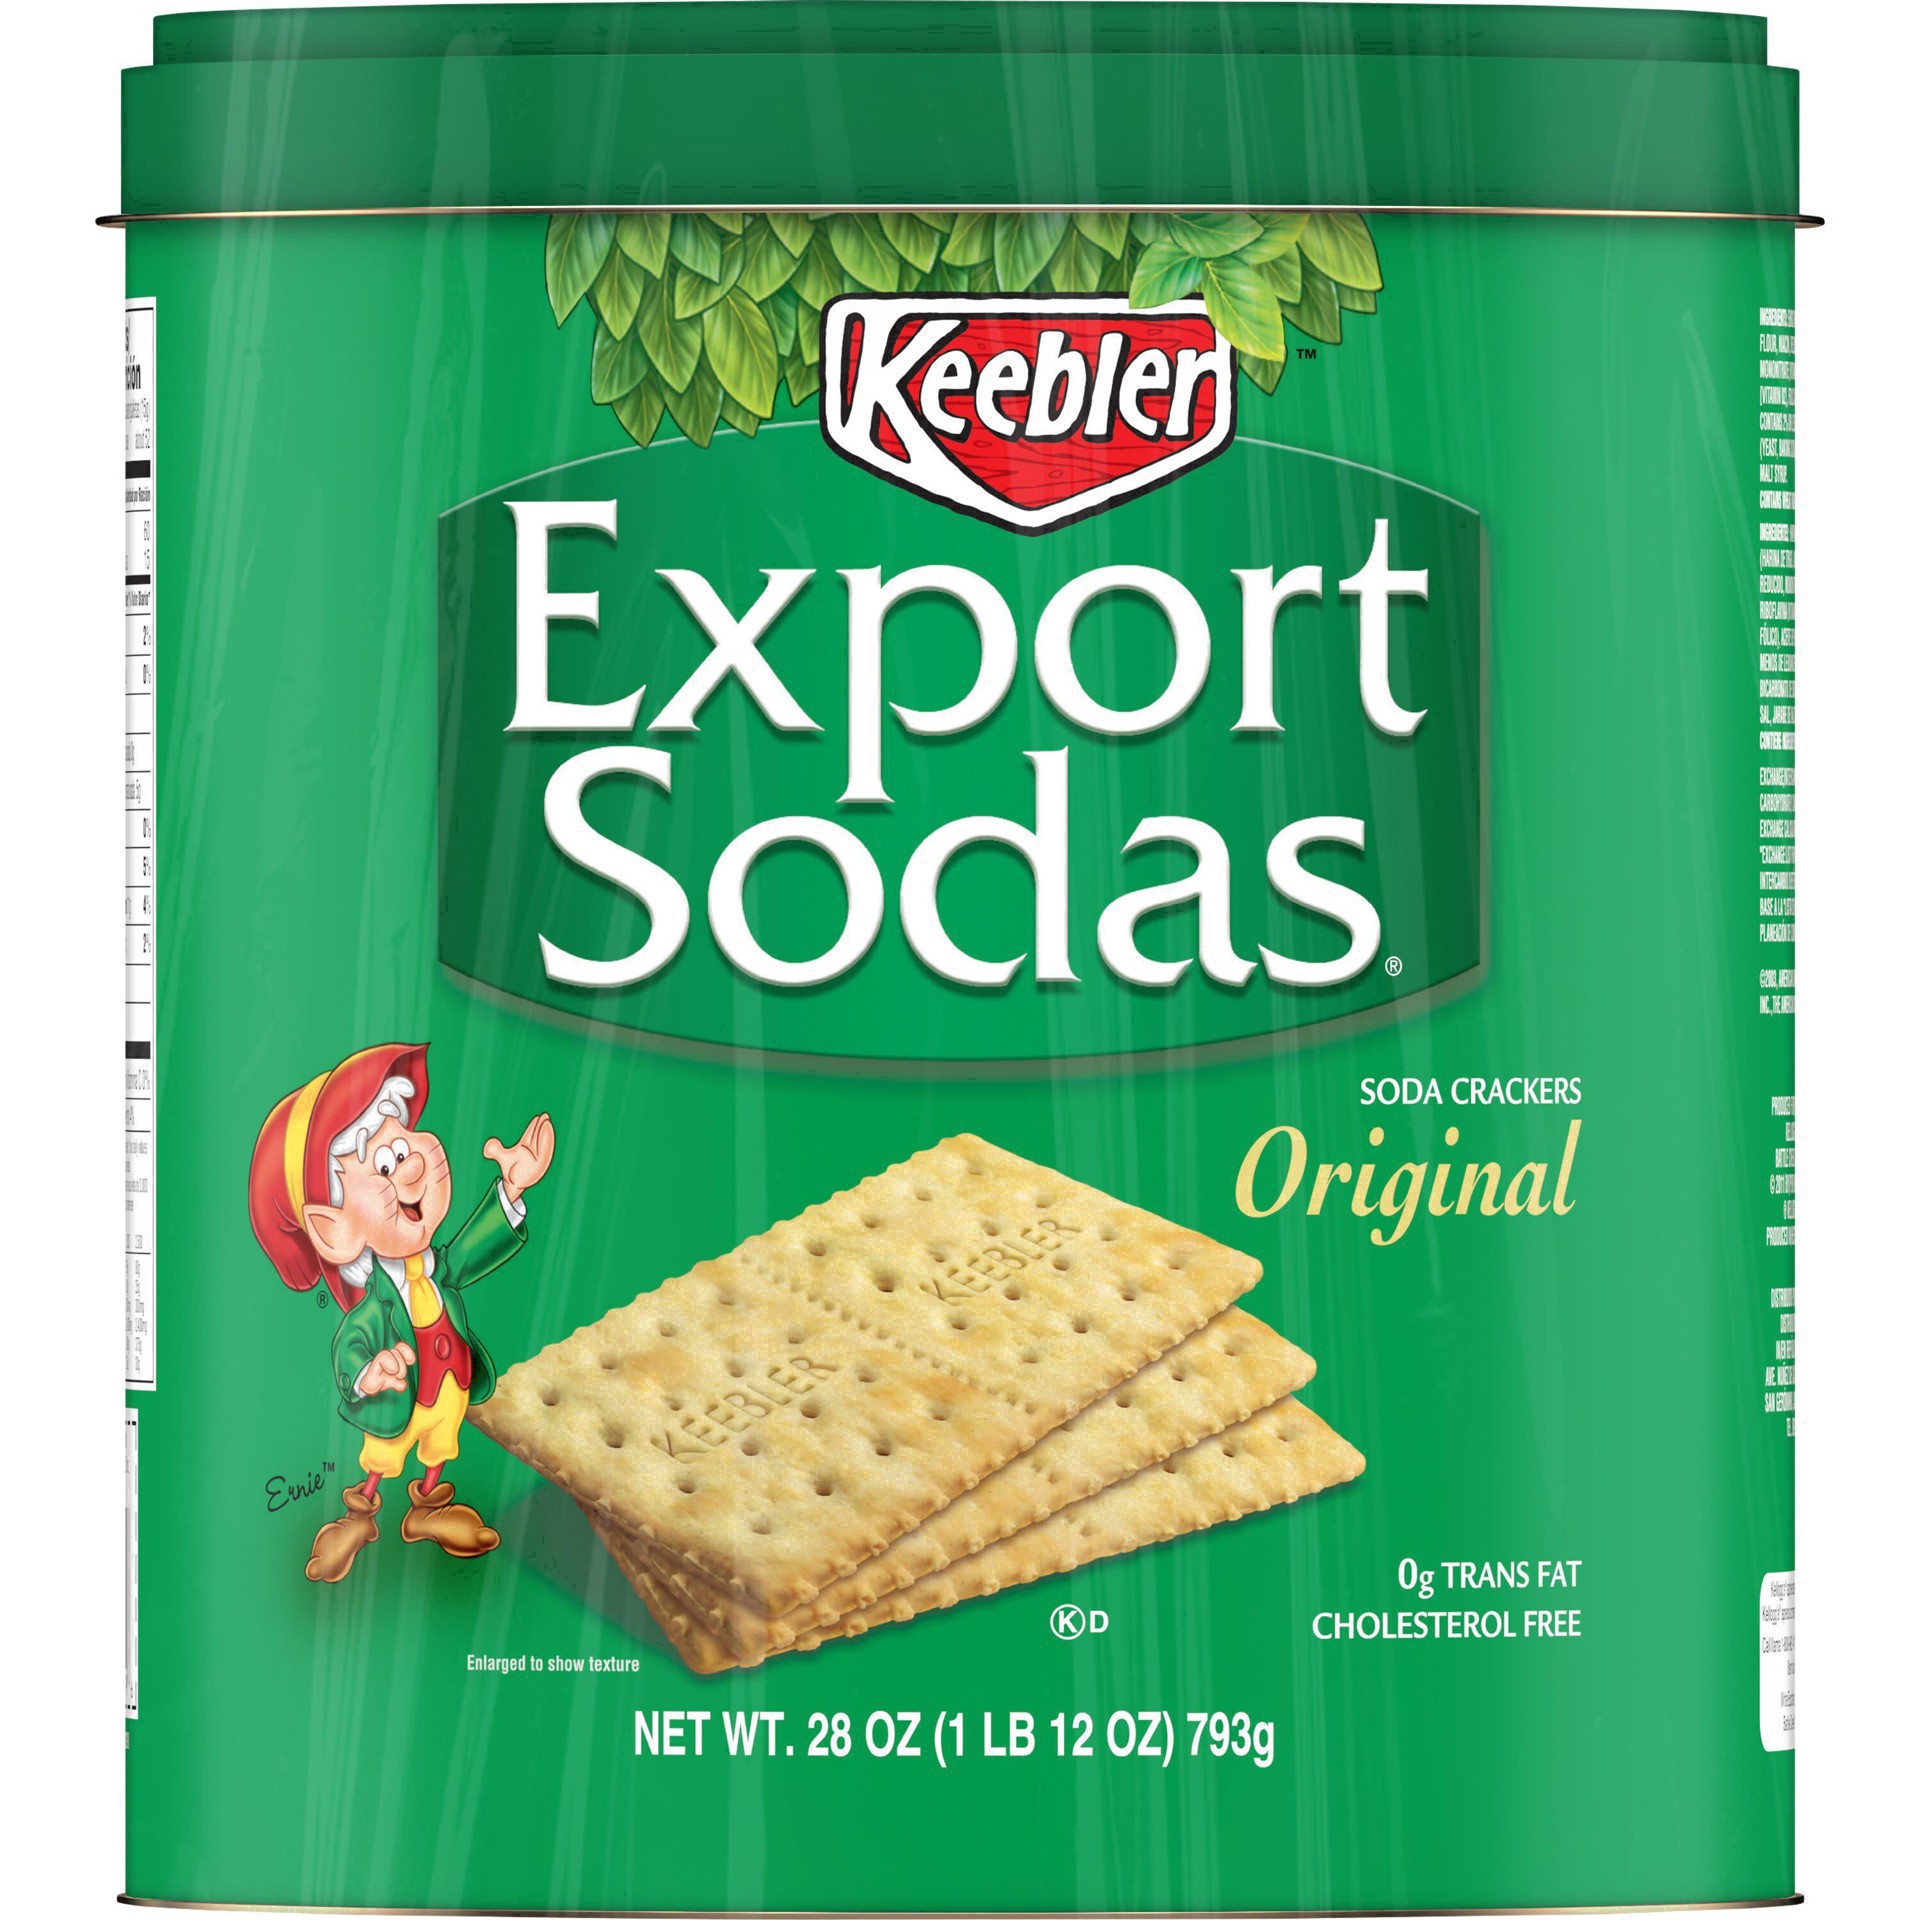 slide 10 of 63, Keebler Export Sodas Soda Crackers, Original, 28 oz, 28 oz